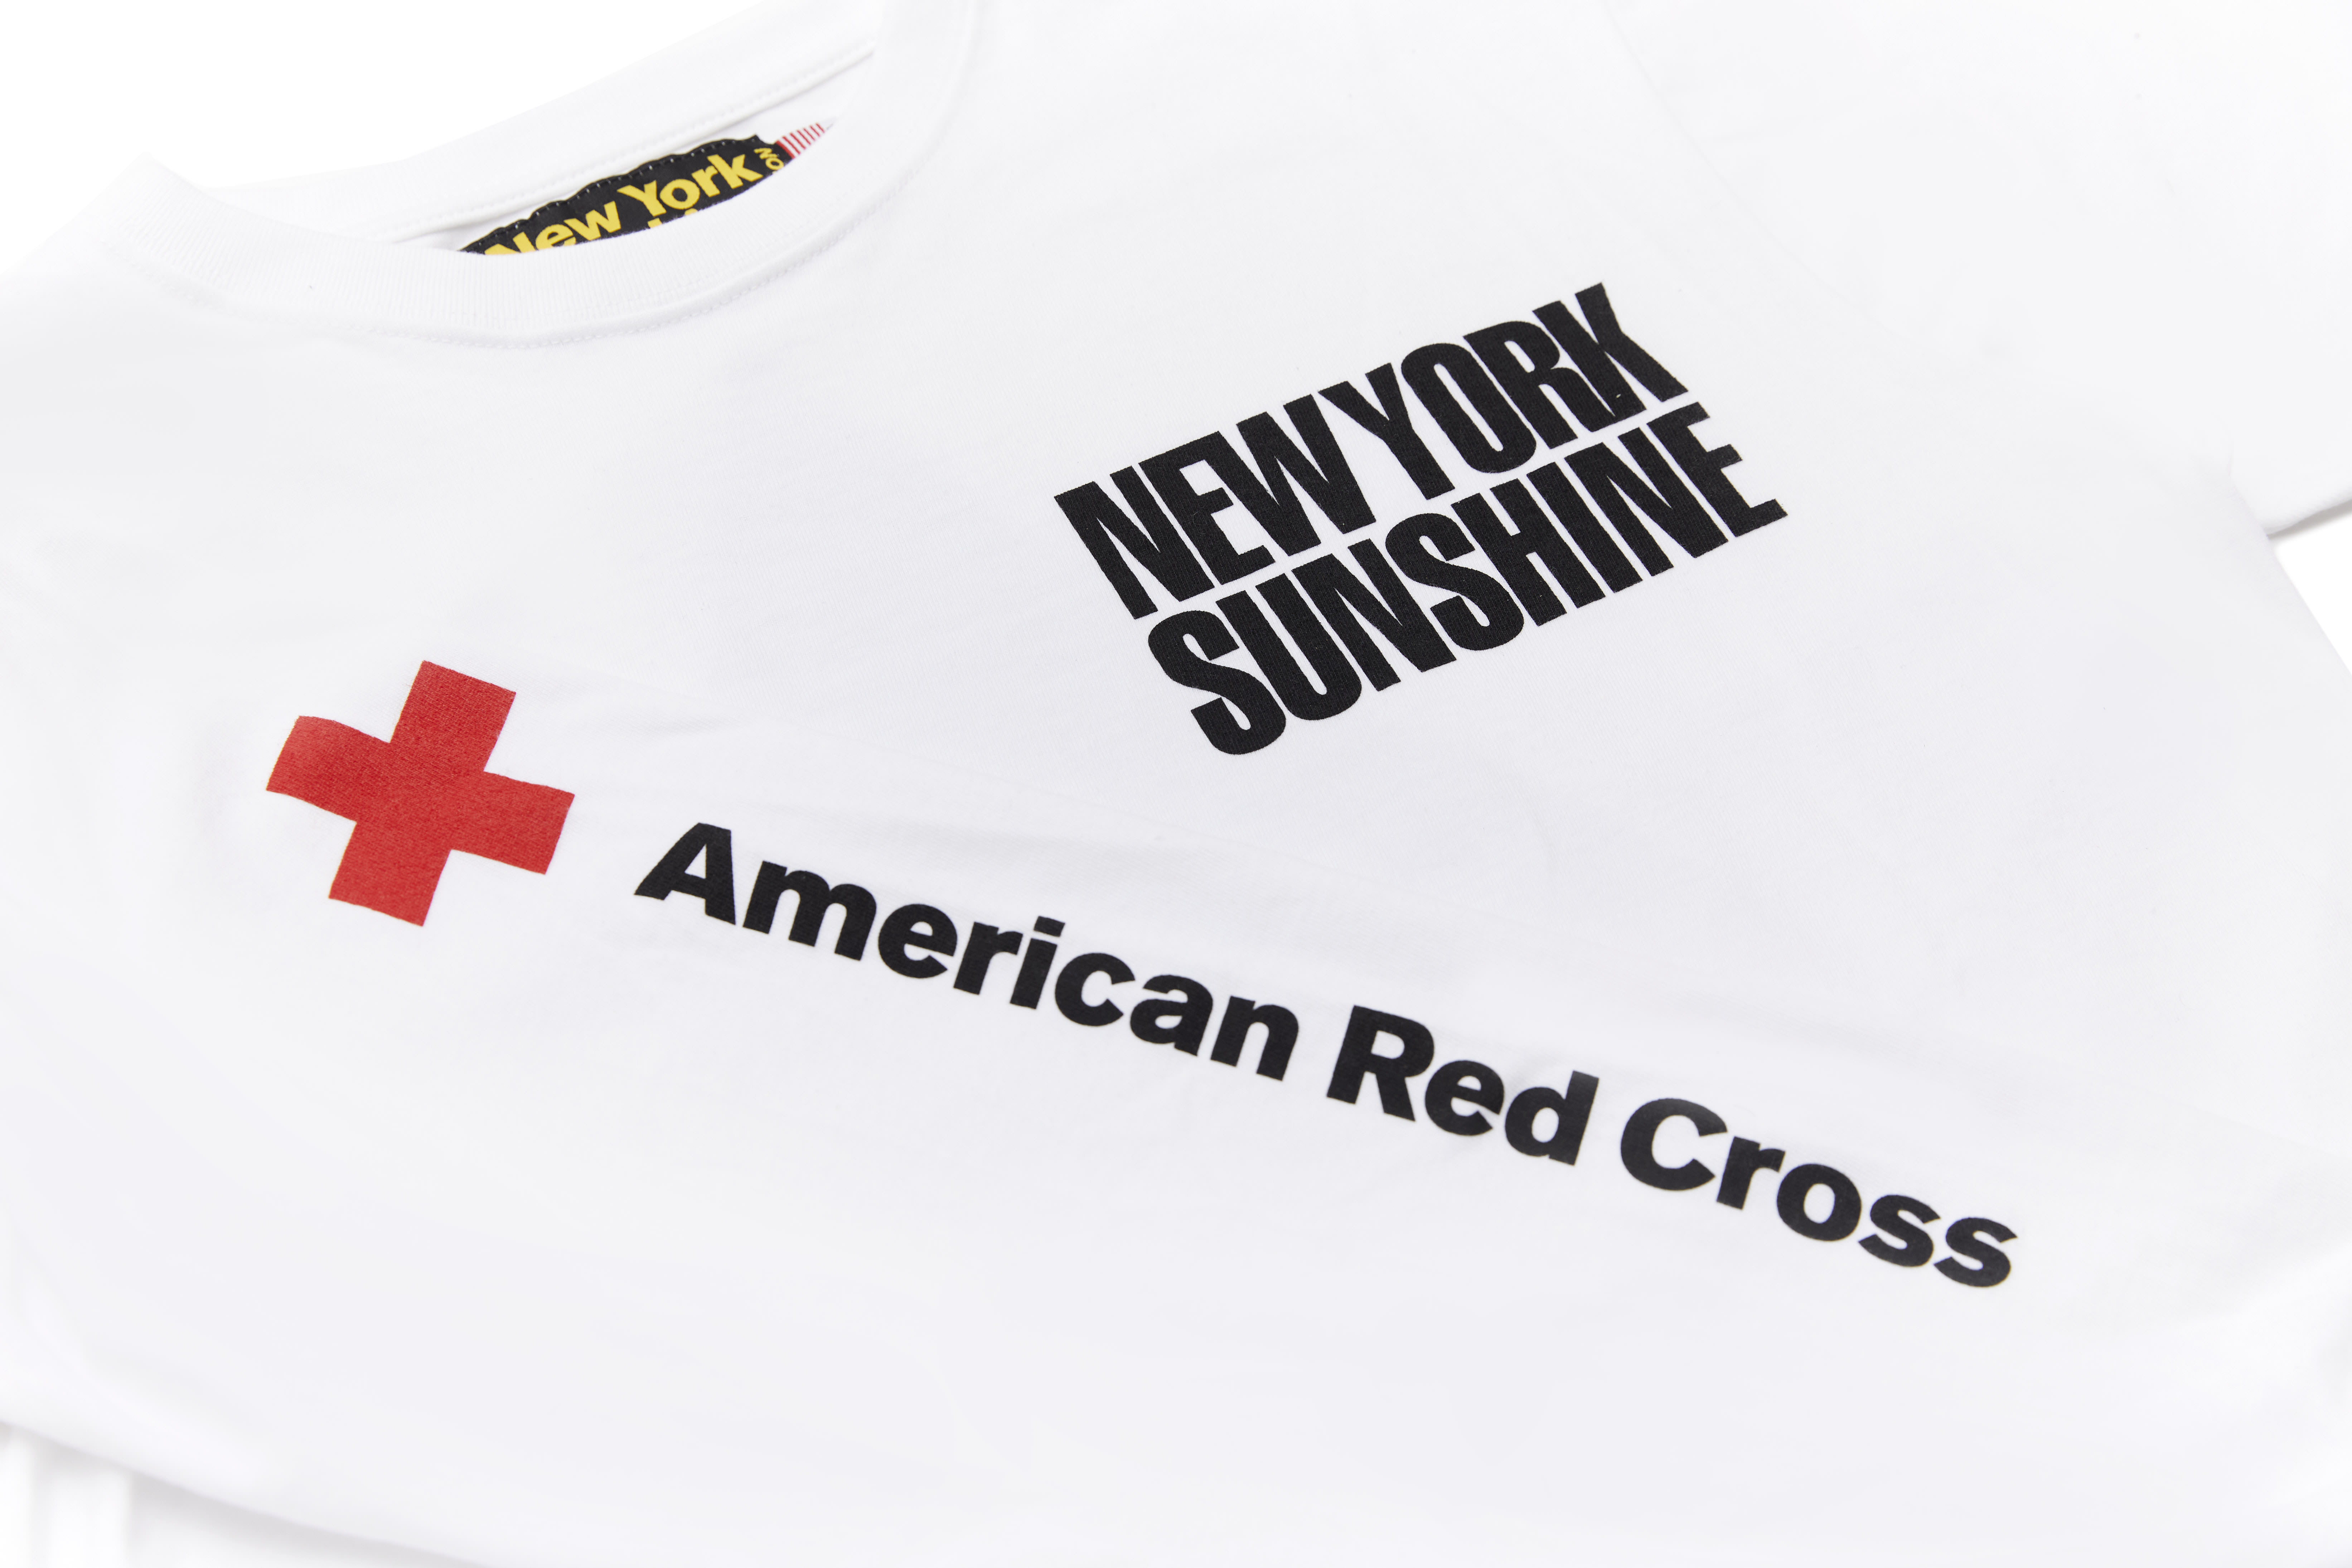 Image via New York Sunshine/American Red Cross